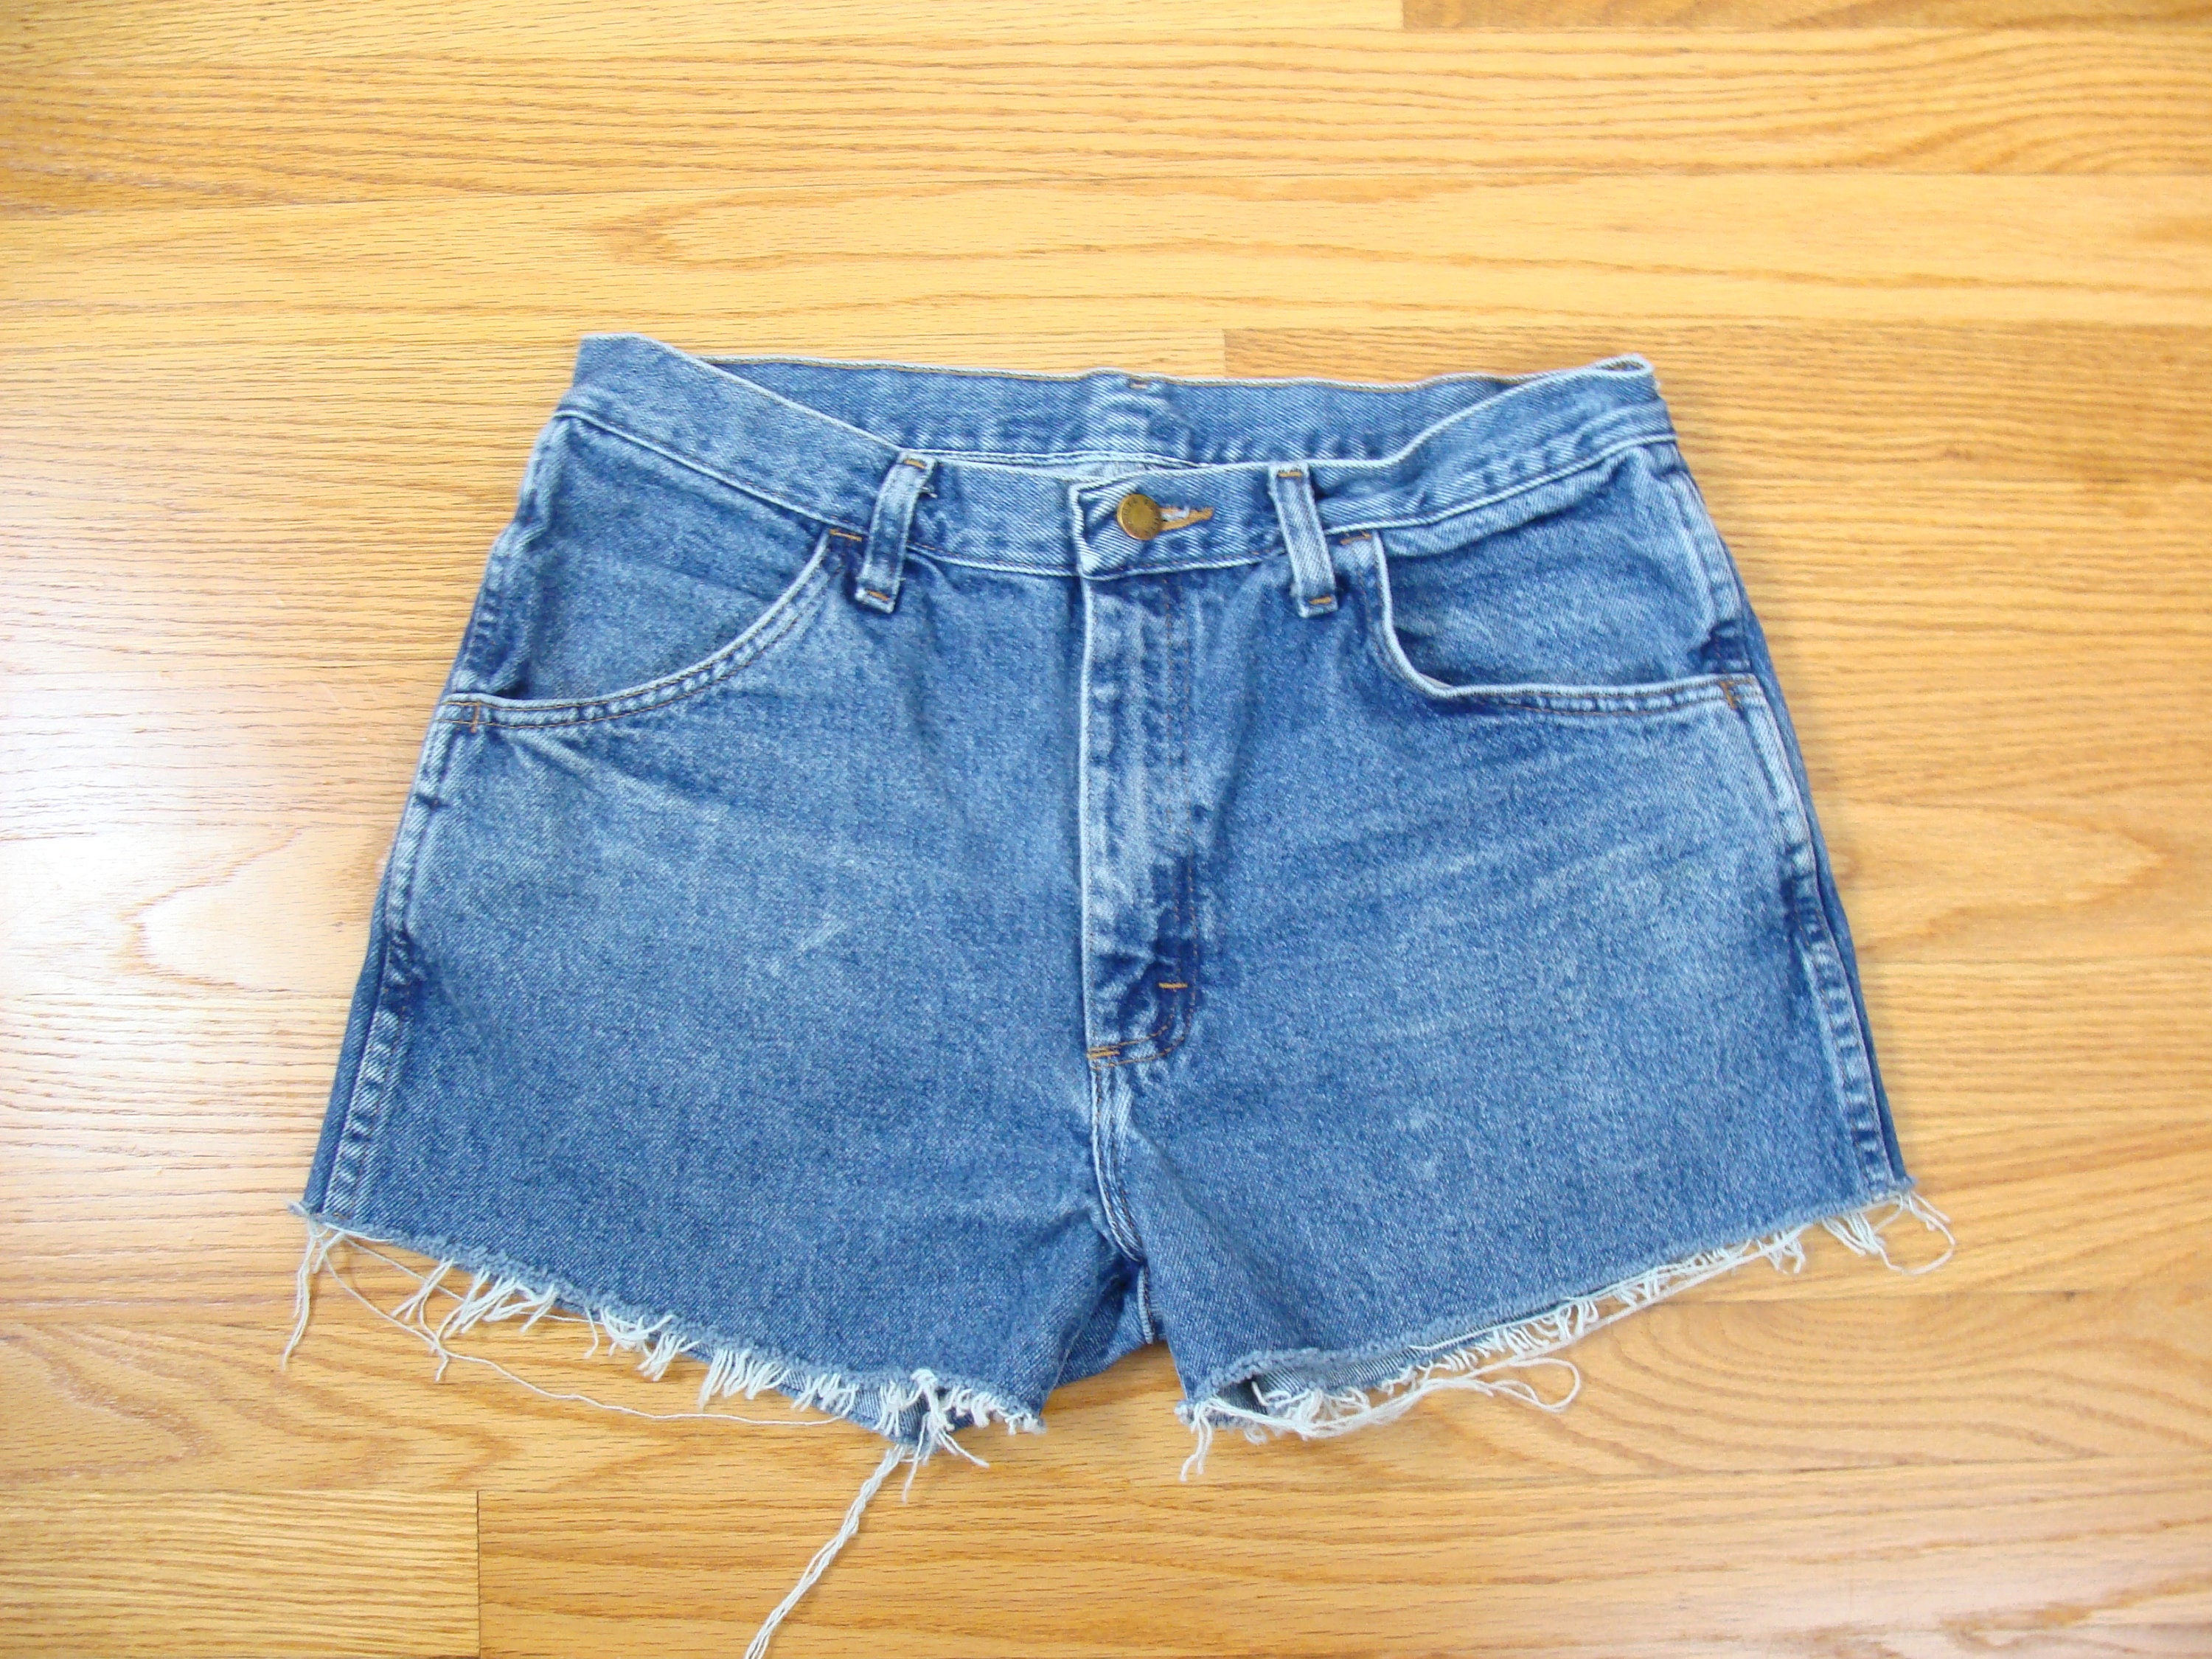 Vintage Jean Shorts 90s High Waisted Cut Off Shorts Denim | Etsy